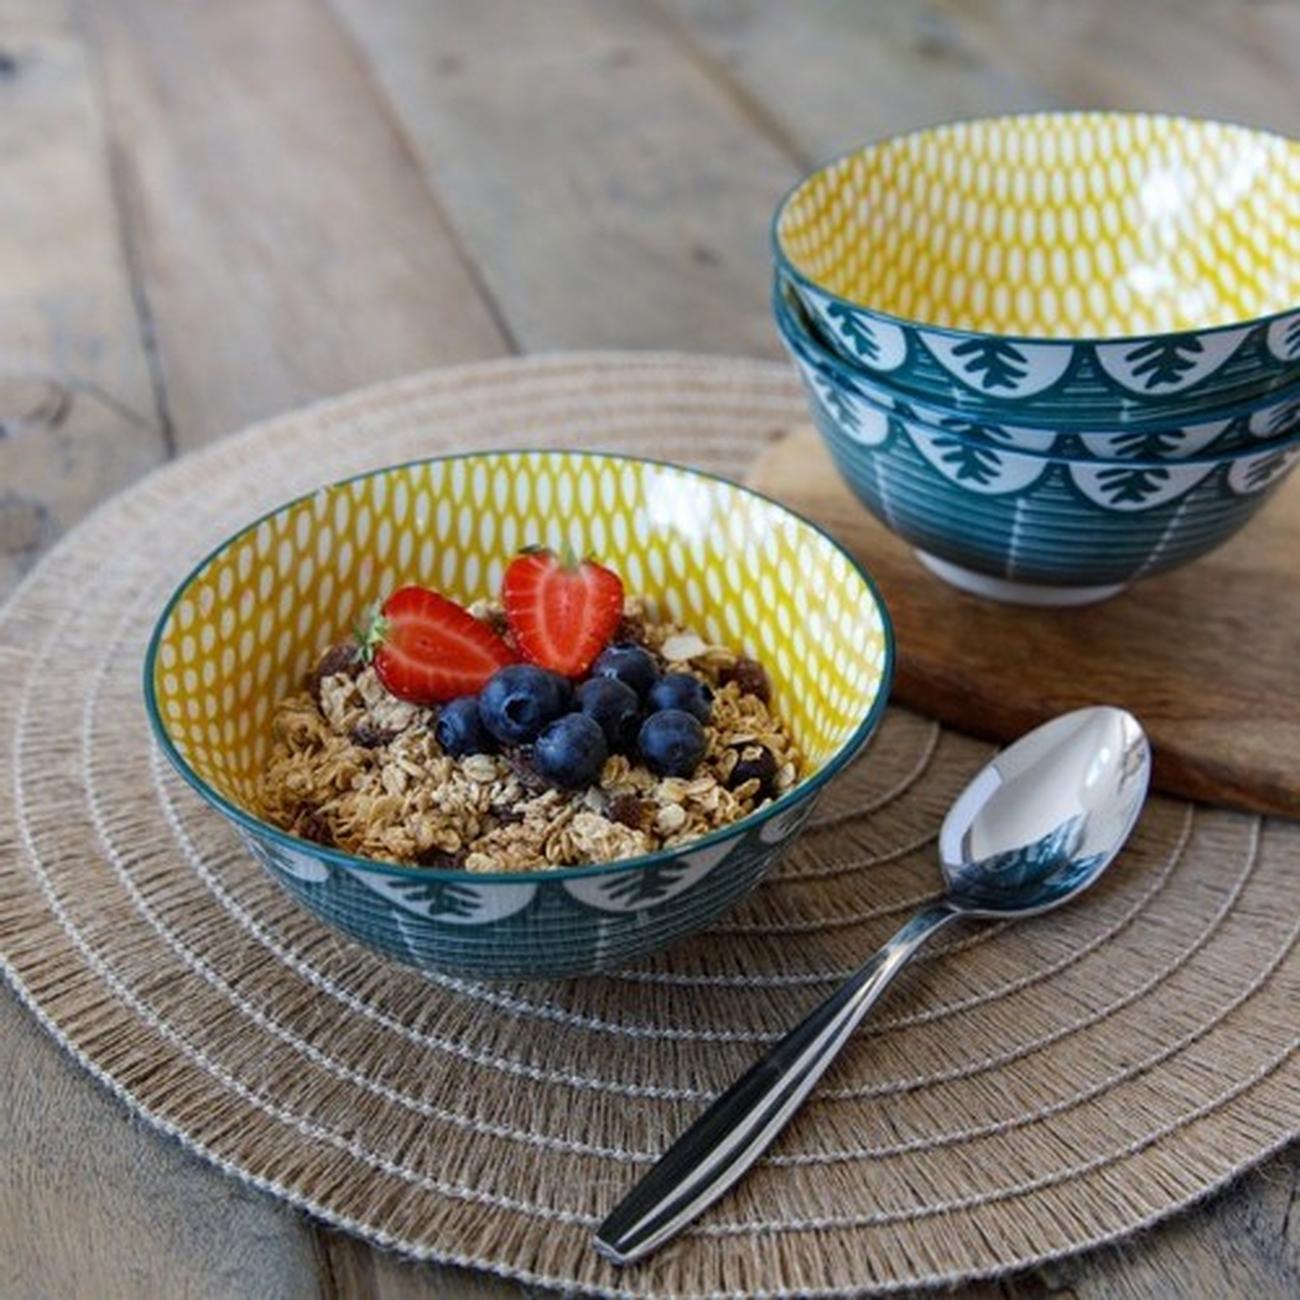 kitchencraft-leafy-green-ceramic-bowl - KitchenCraft Leafy Green Print Ceramic Bowl